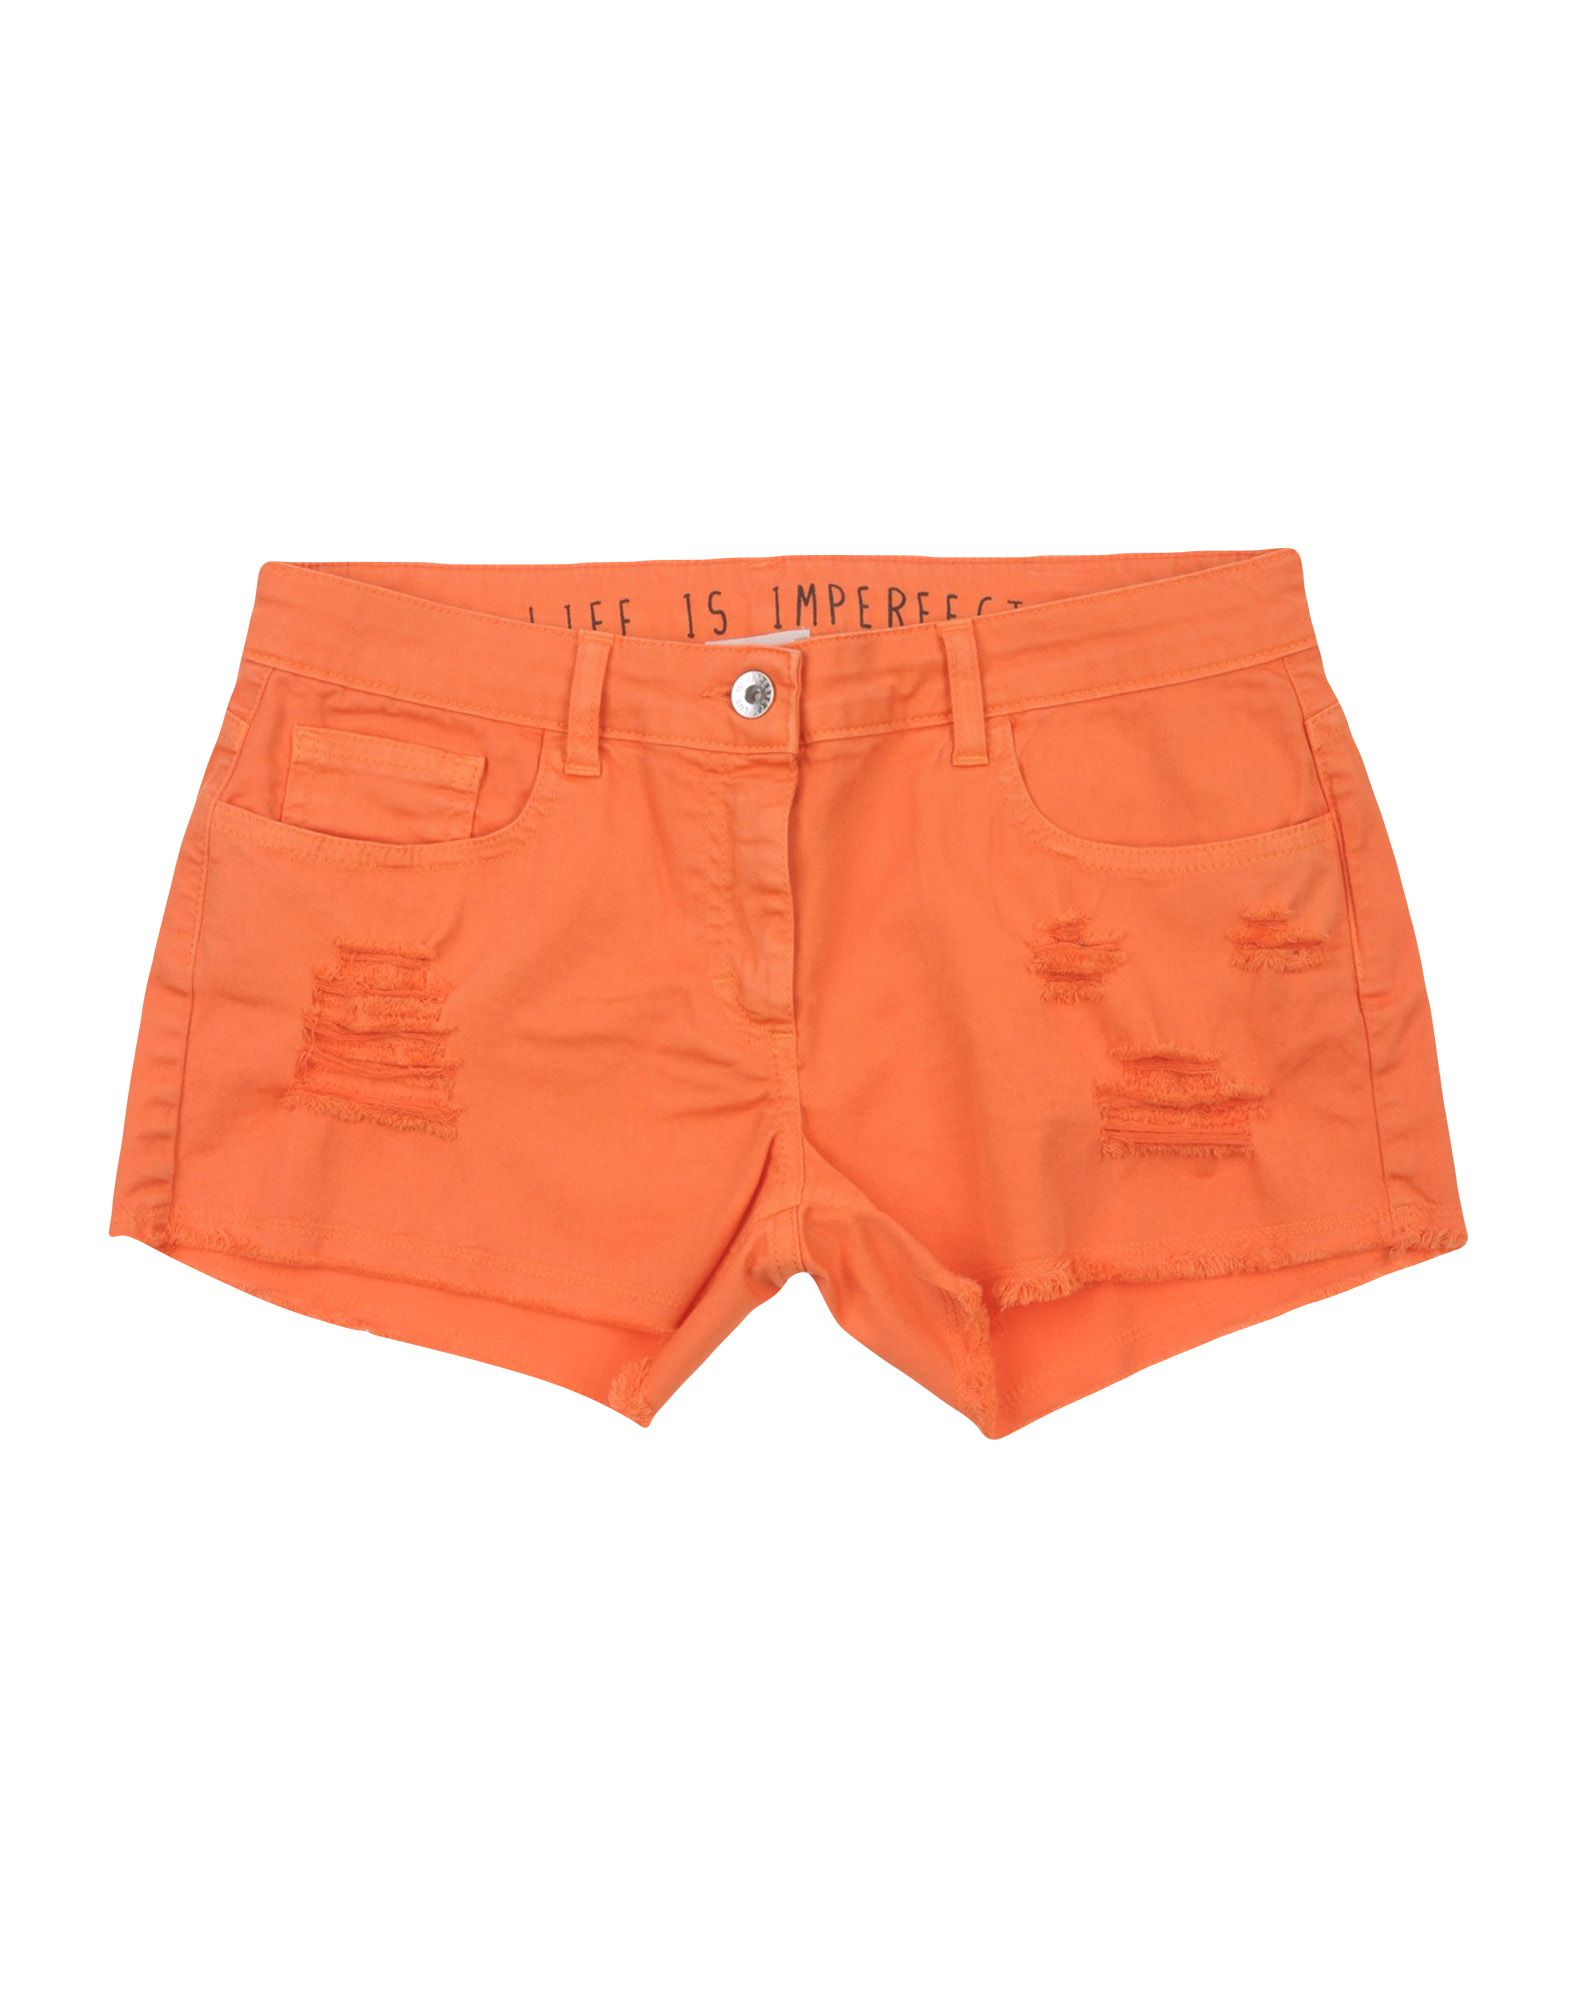 !m?erfect Kids'  Shorts In Orange